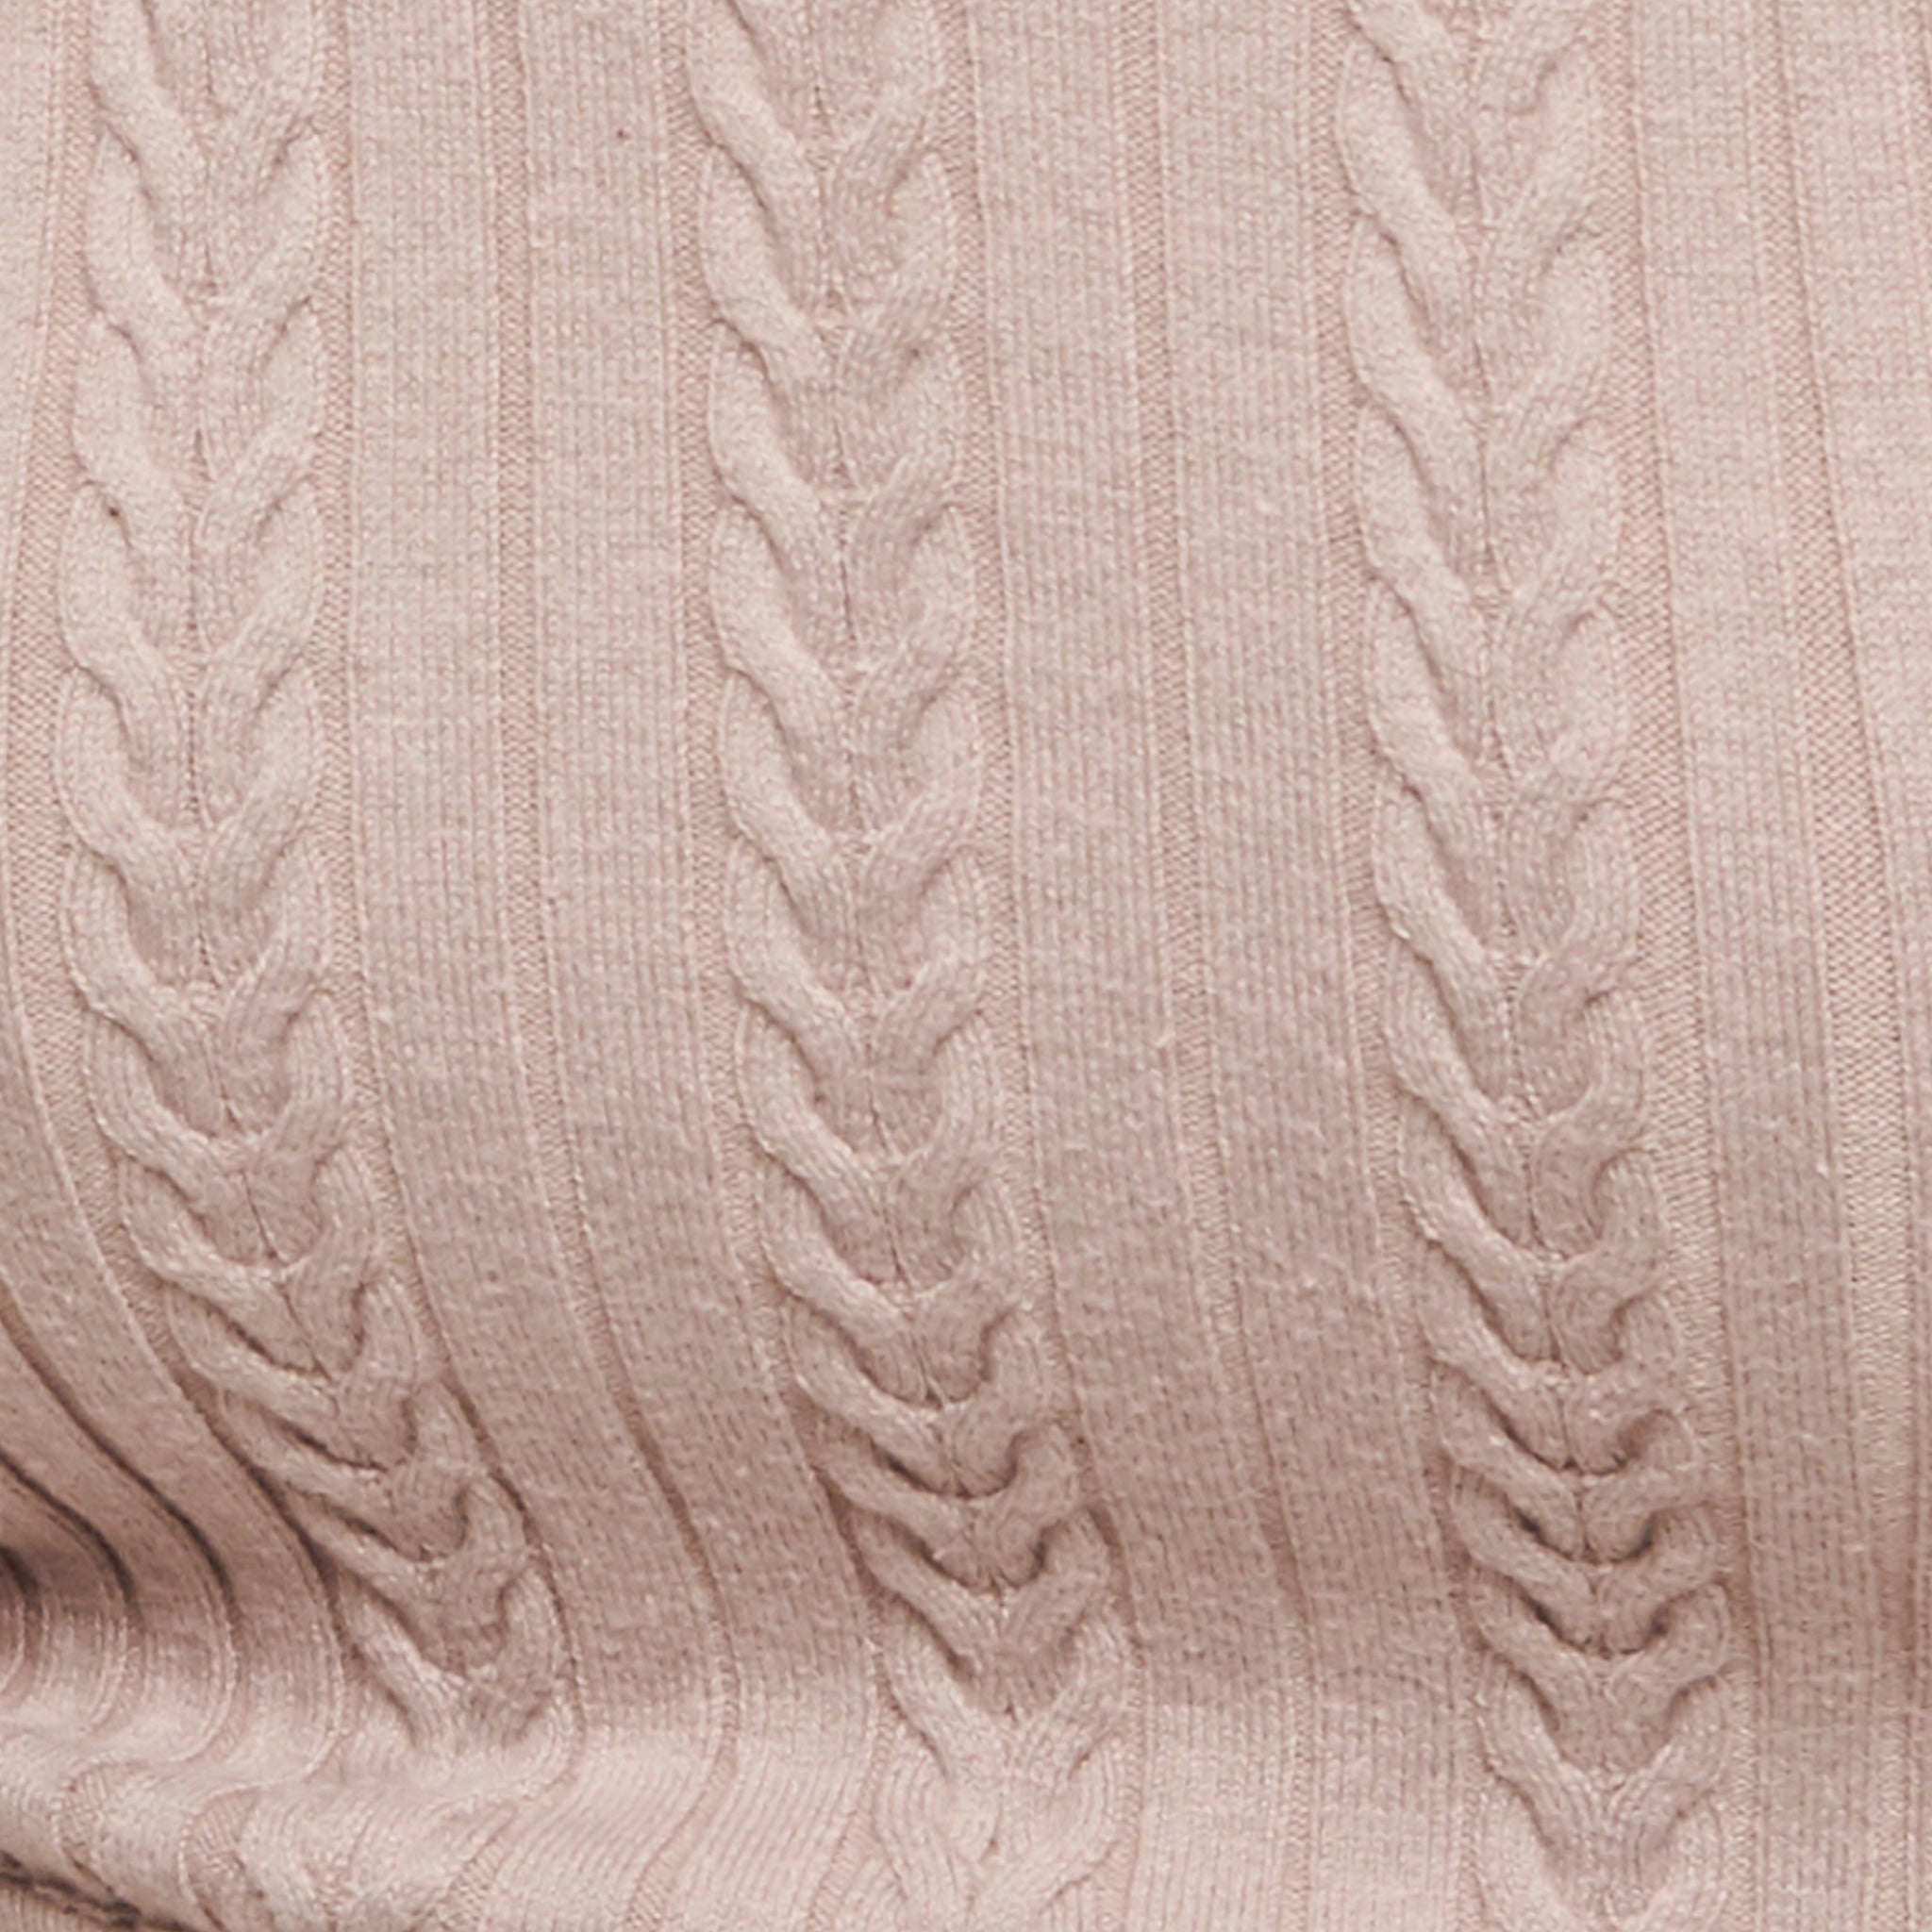 hello ronron | Angelique Dress | V-neck braided cable knit midi dress